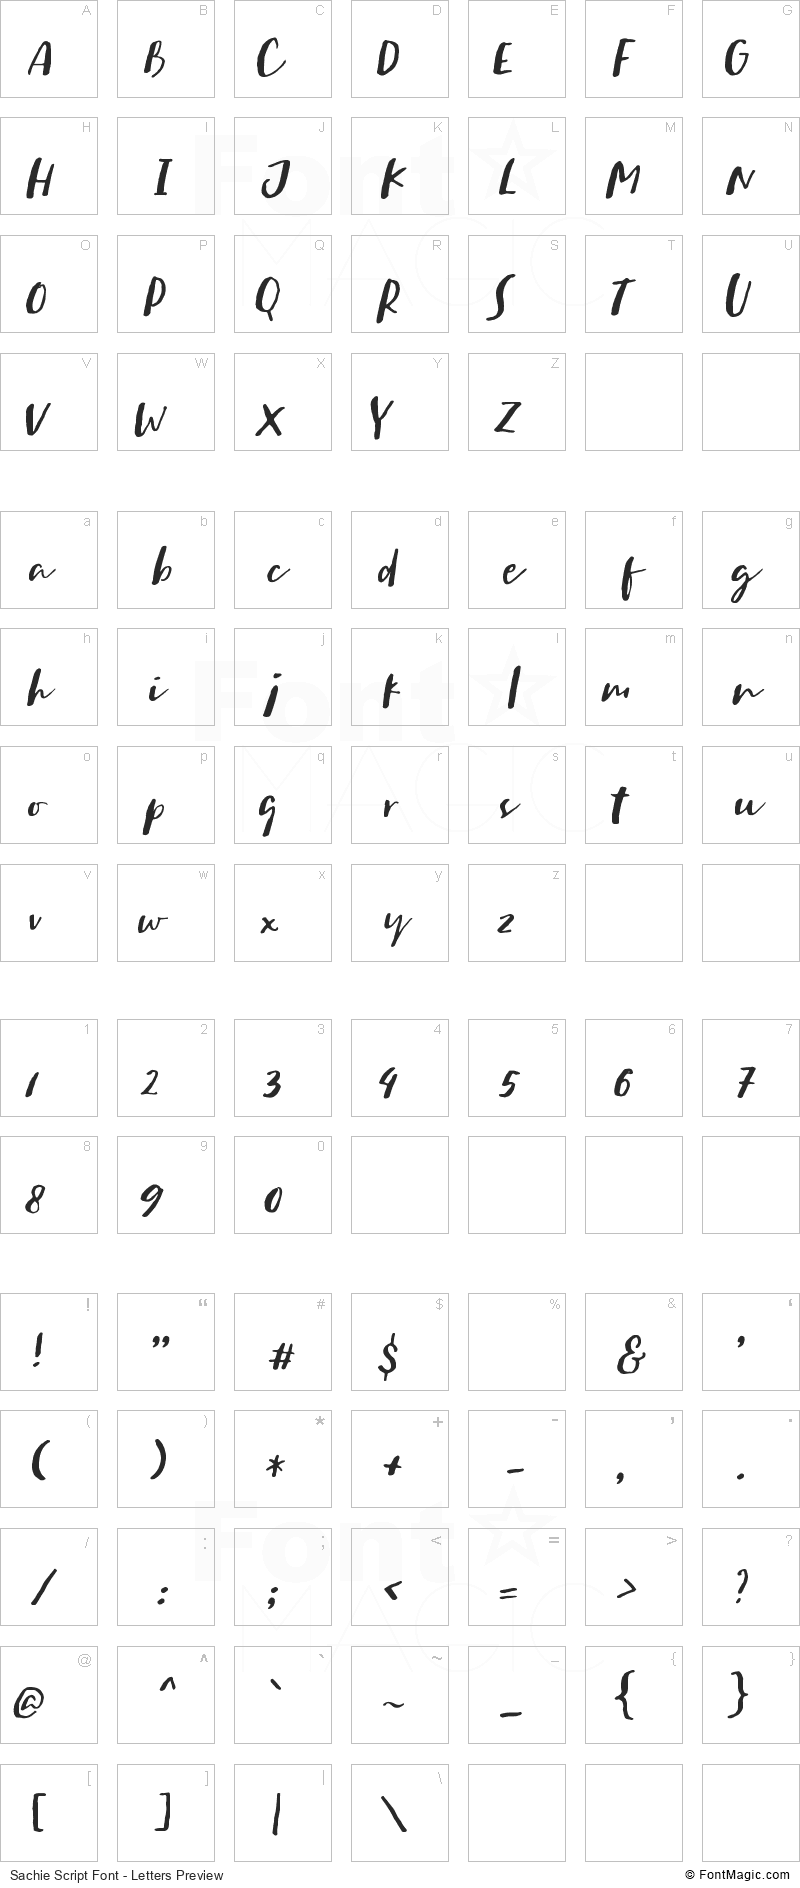 Sachie Script Font - All Latters Preview Chart